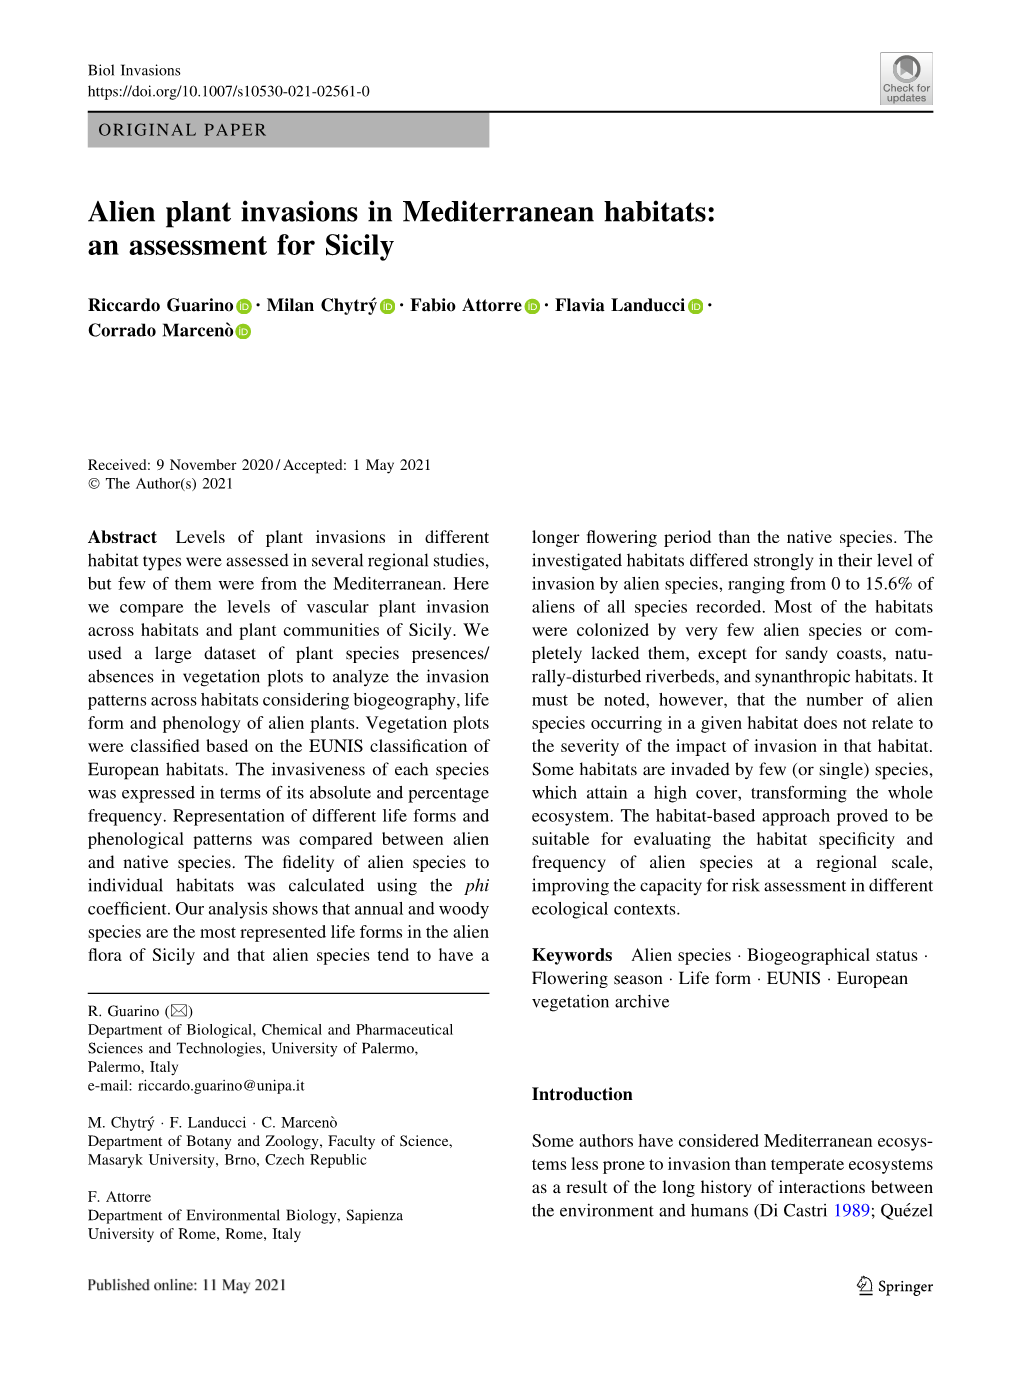 Alien Plant Invasions in Mediterranean Habitats: an Assessment for Sicily